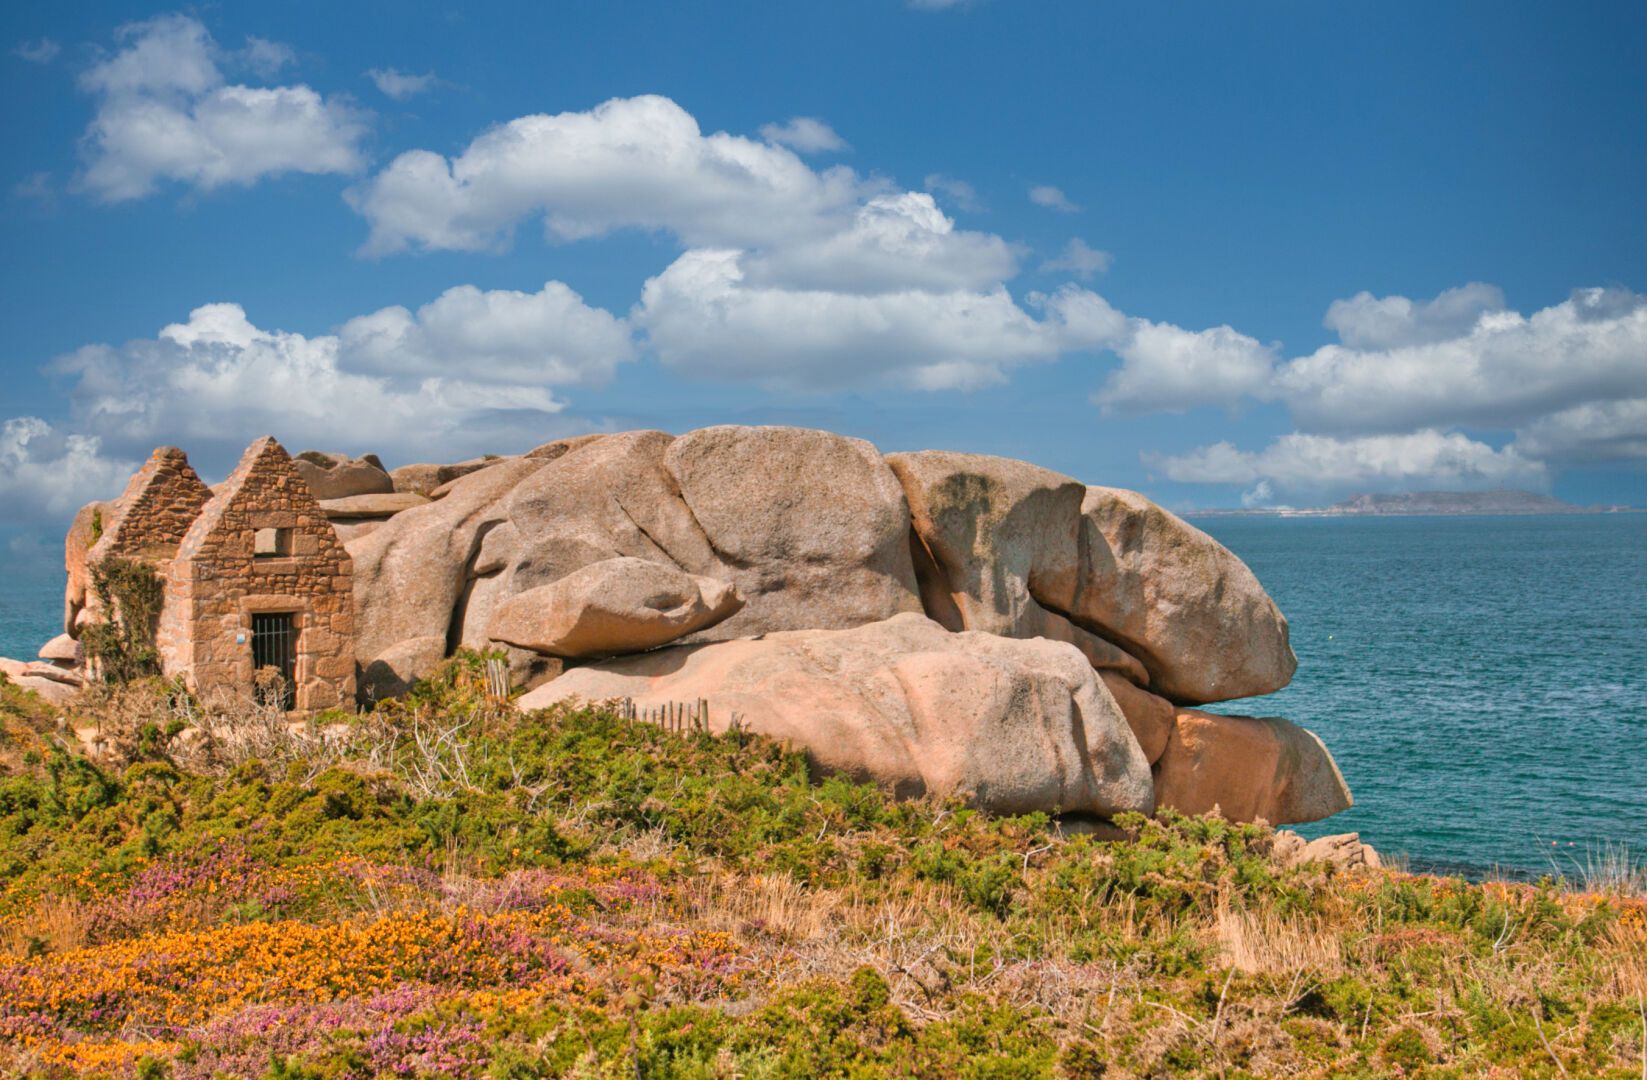 Aod ar Vein Ruz - Côte de Granit Rose

#bretagne #seascape #photography #fotomontag